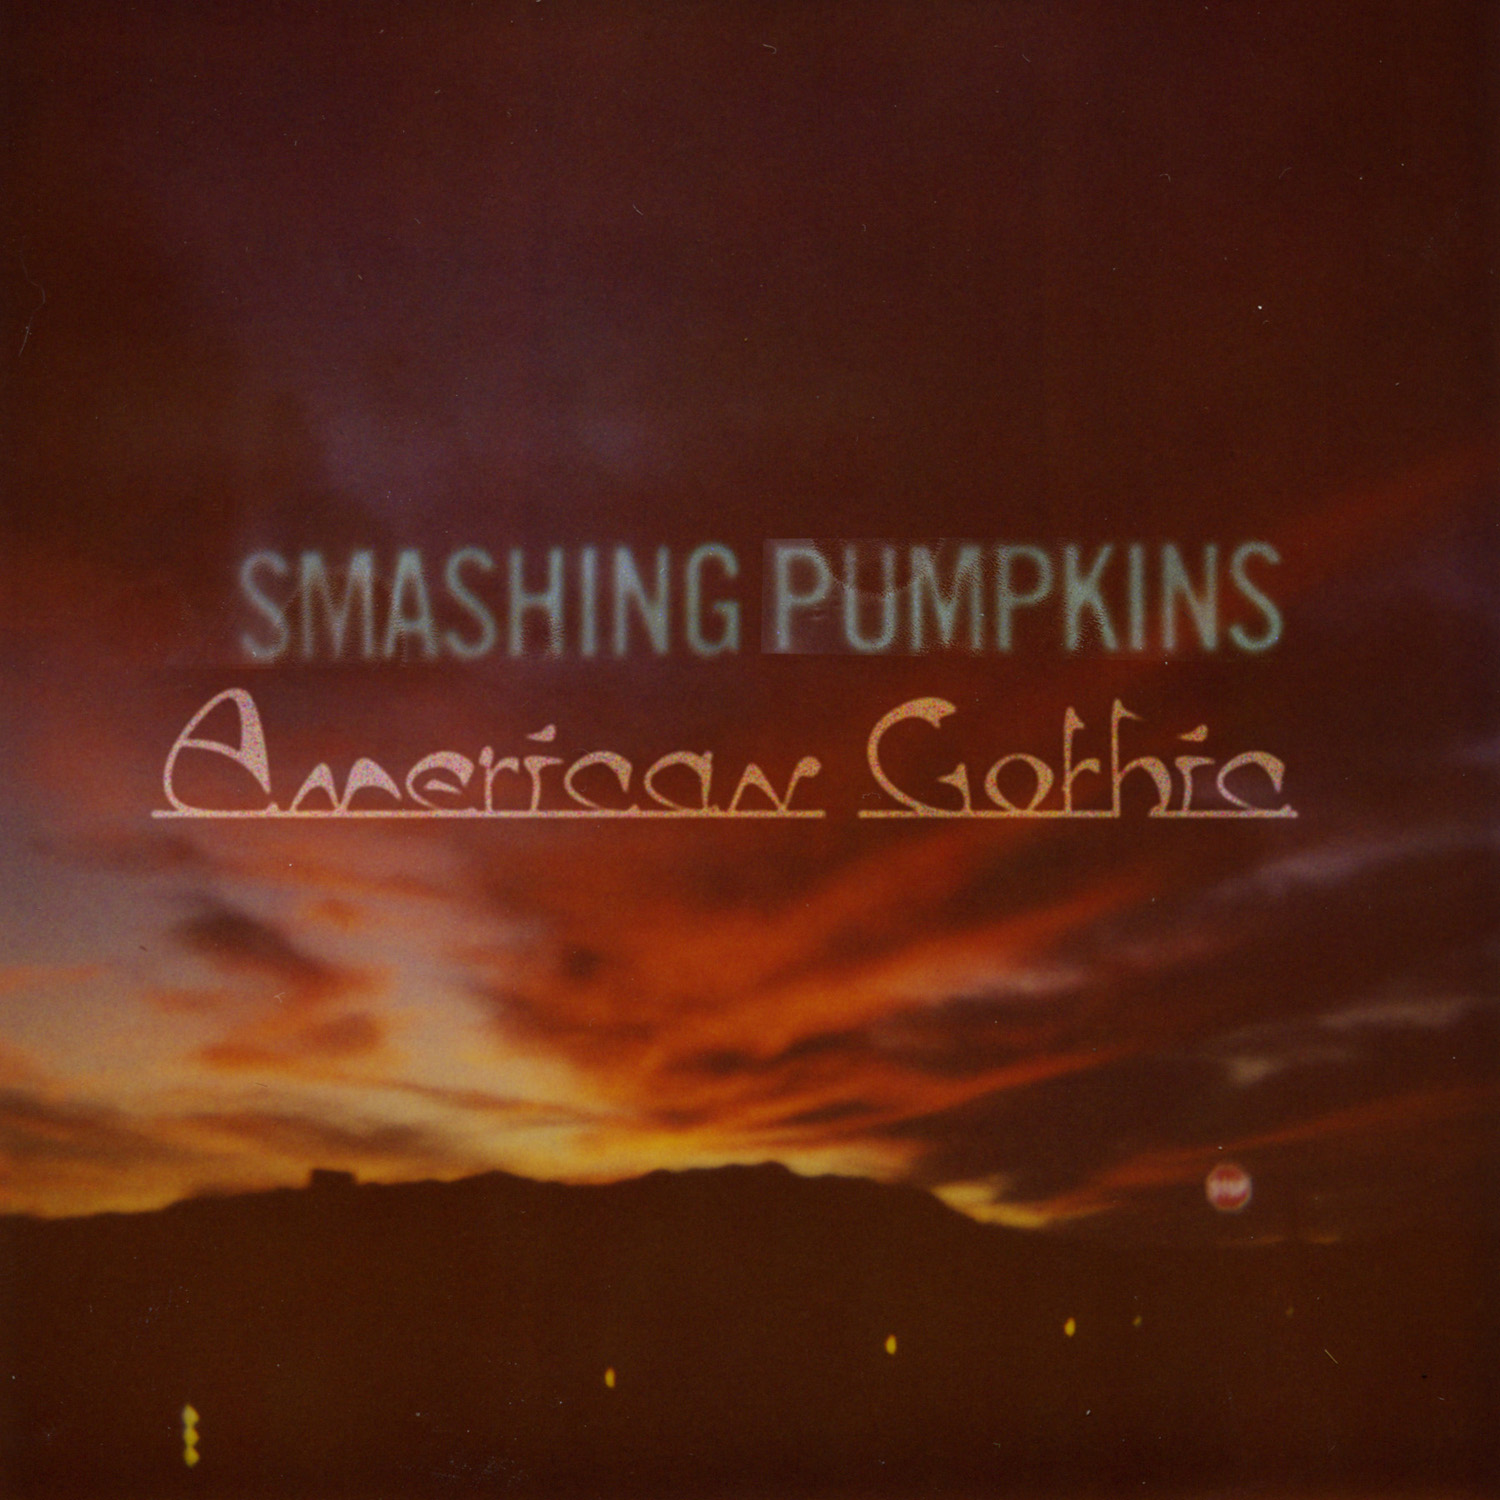 Smashing Pumpkins - American Gothic